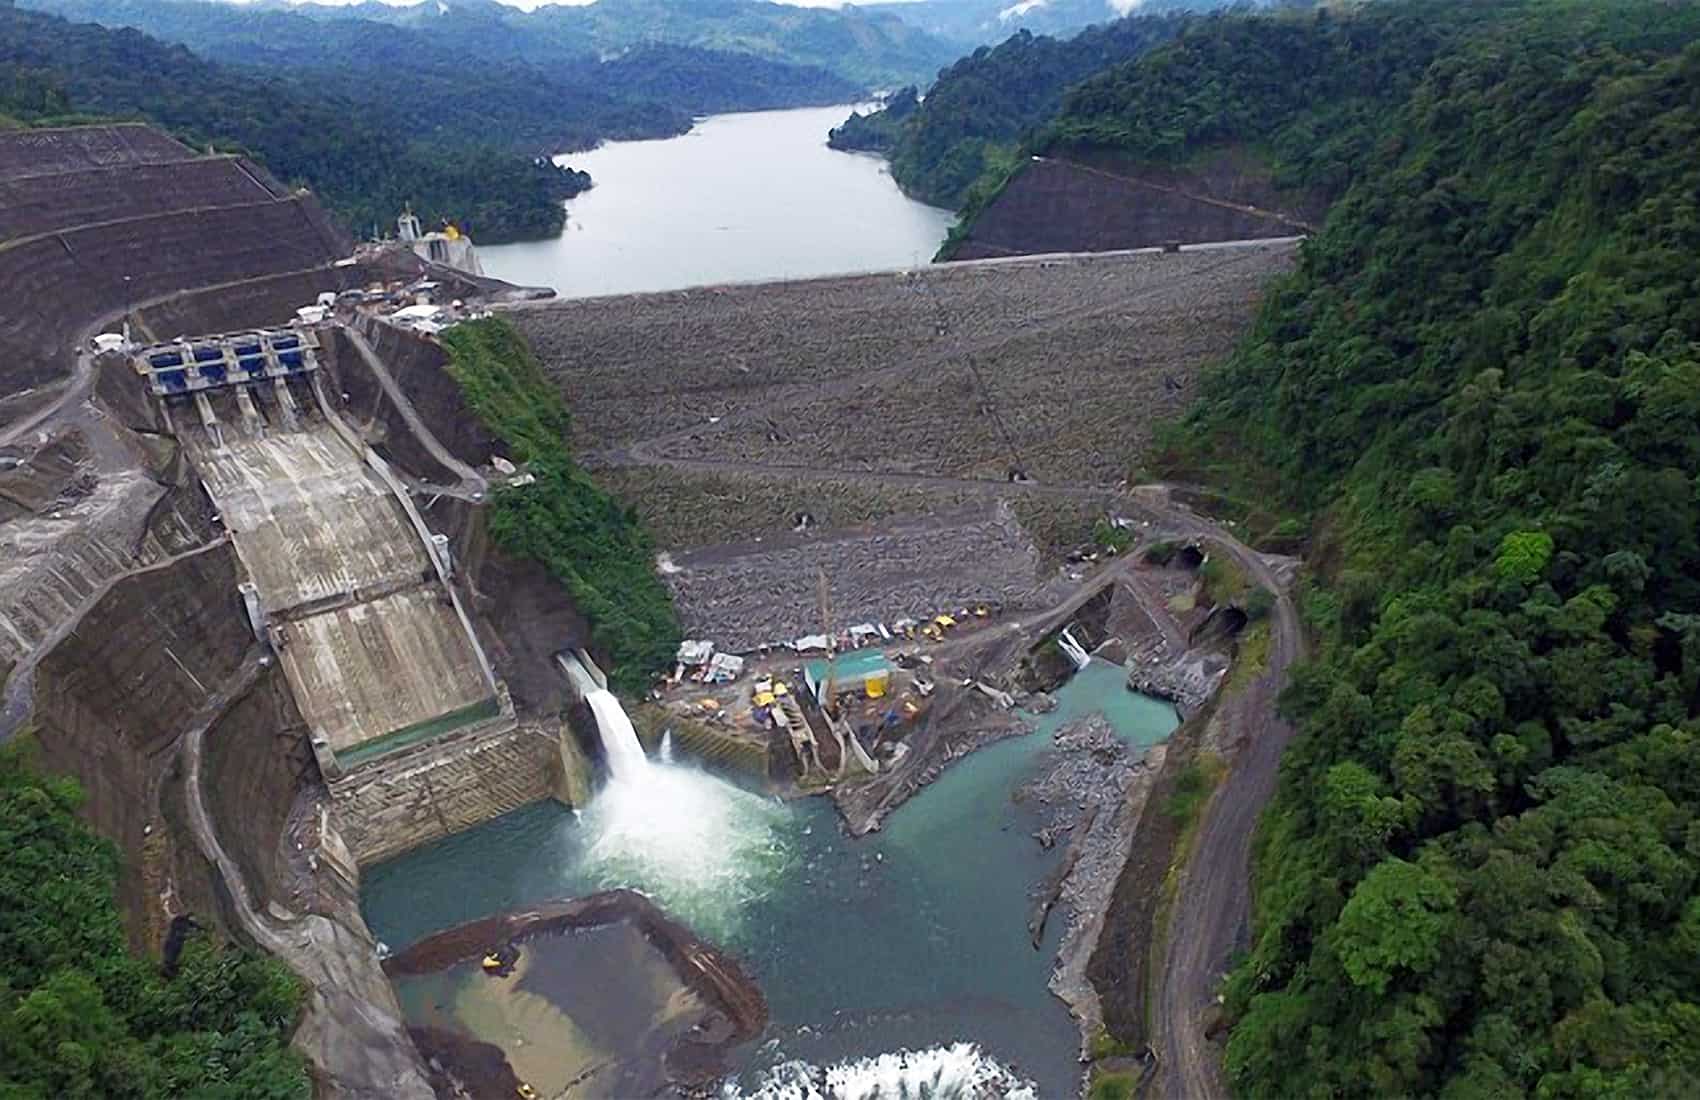 Reventazón hydroelectric plant. Electricity